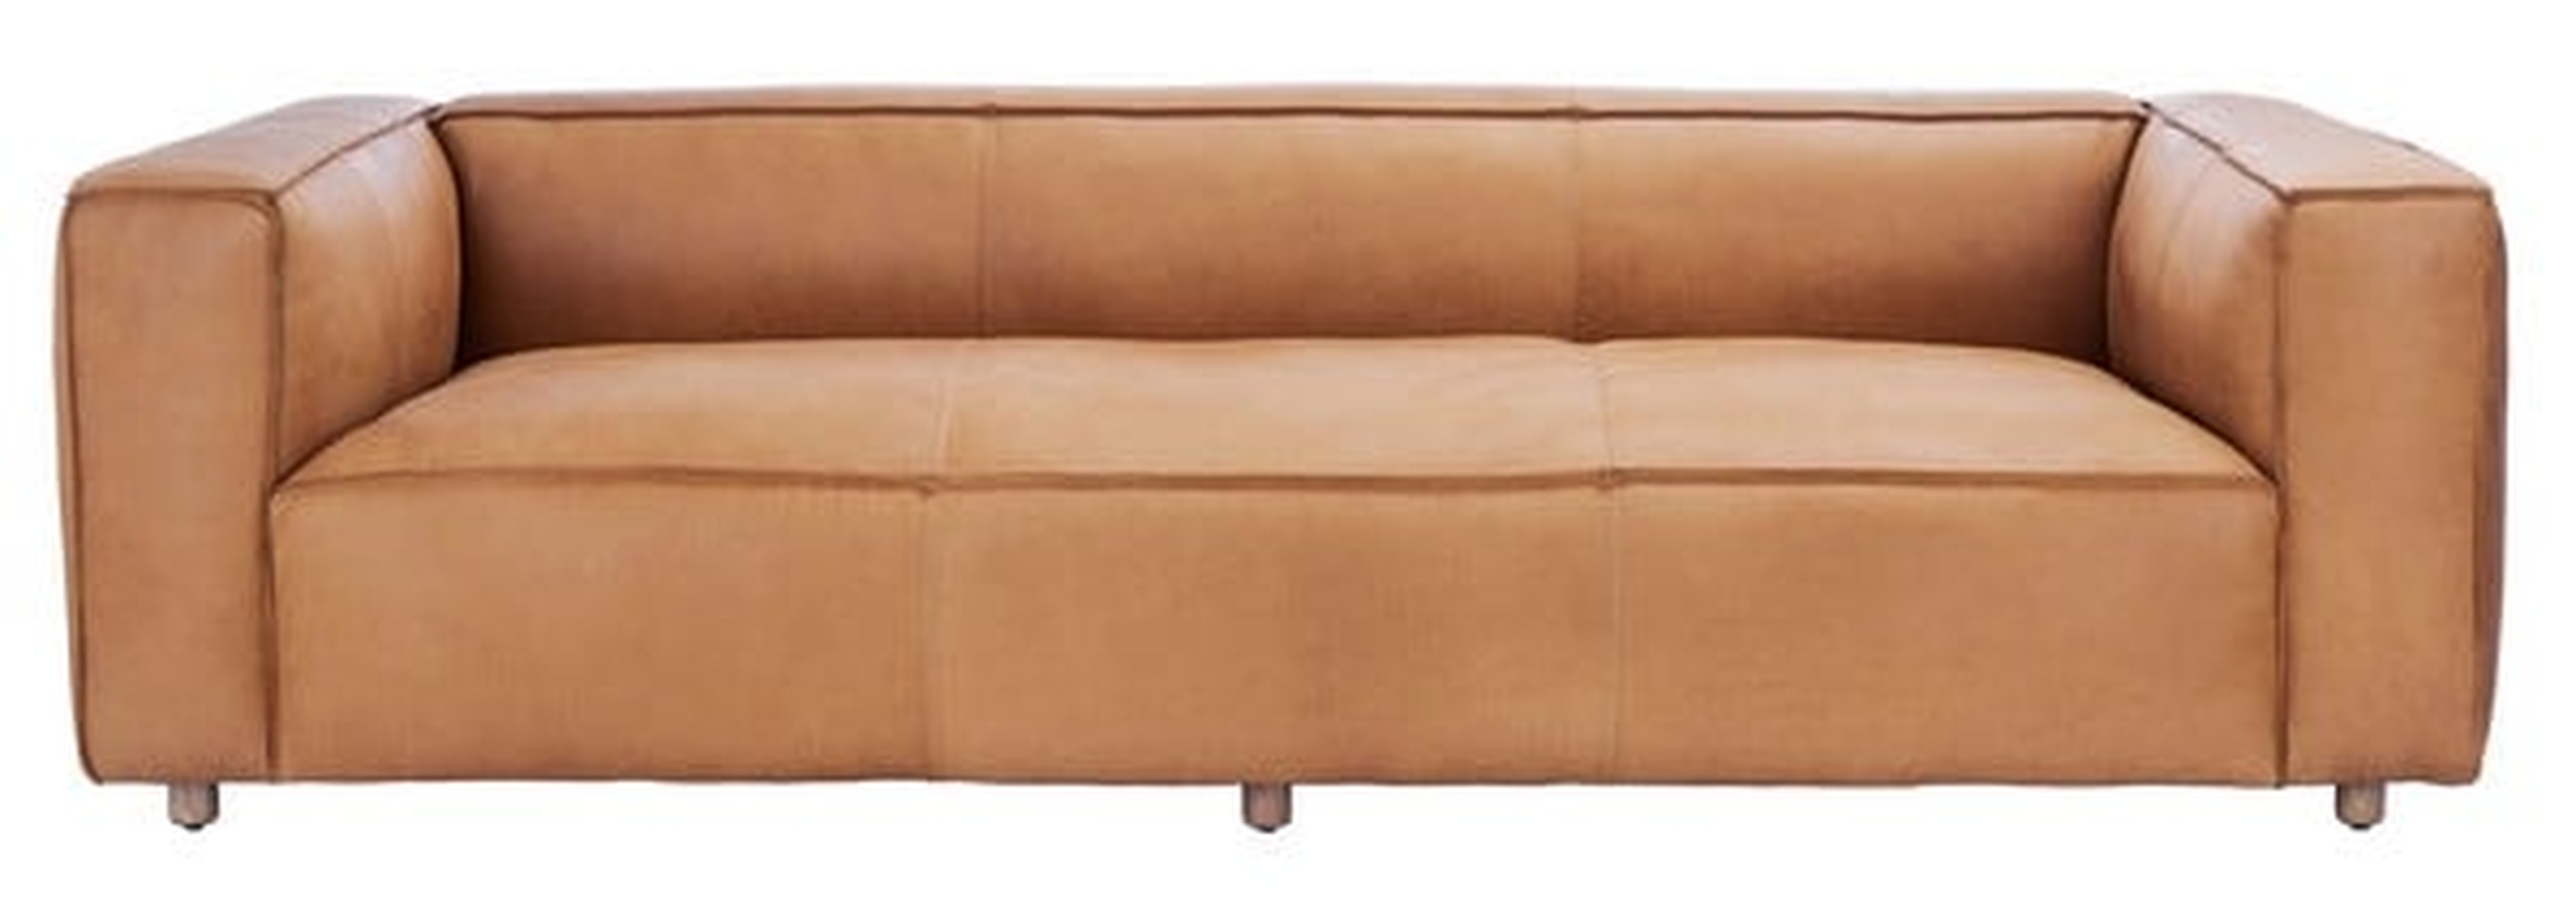 Grover Leather Sofa - Camel - Arlo Home - Arlo Home